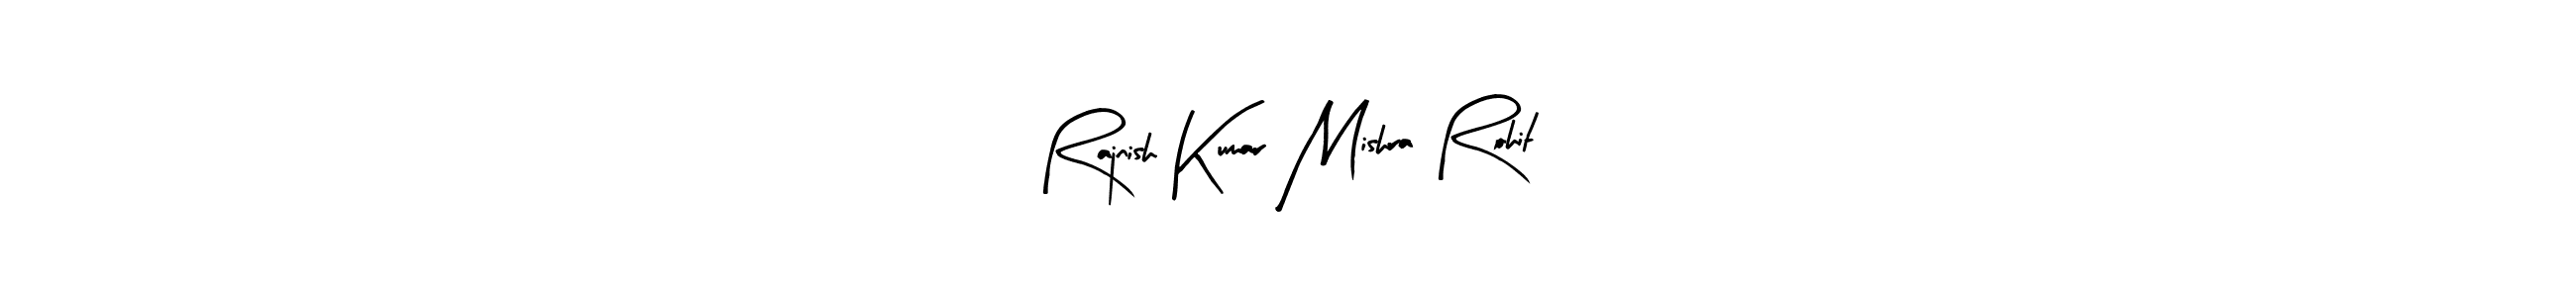 Rajnish Kumar Mishra Rohit stylish signature style. Best Handwritten Sign (Arty Signature) for my name. Handwritten Signature Collection Ideas for my name Rajnish Kumar Mishra Rohit. Rajnish Kumar Mishra Rohit signature style 8 images and pictures png